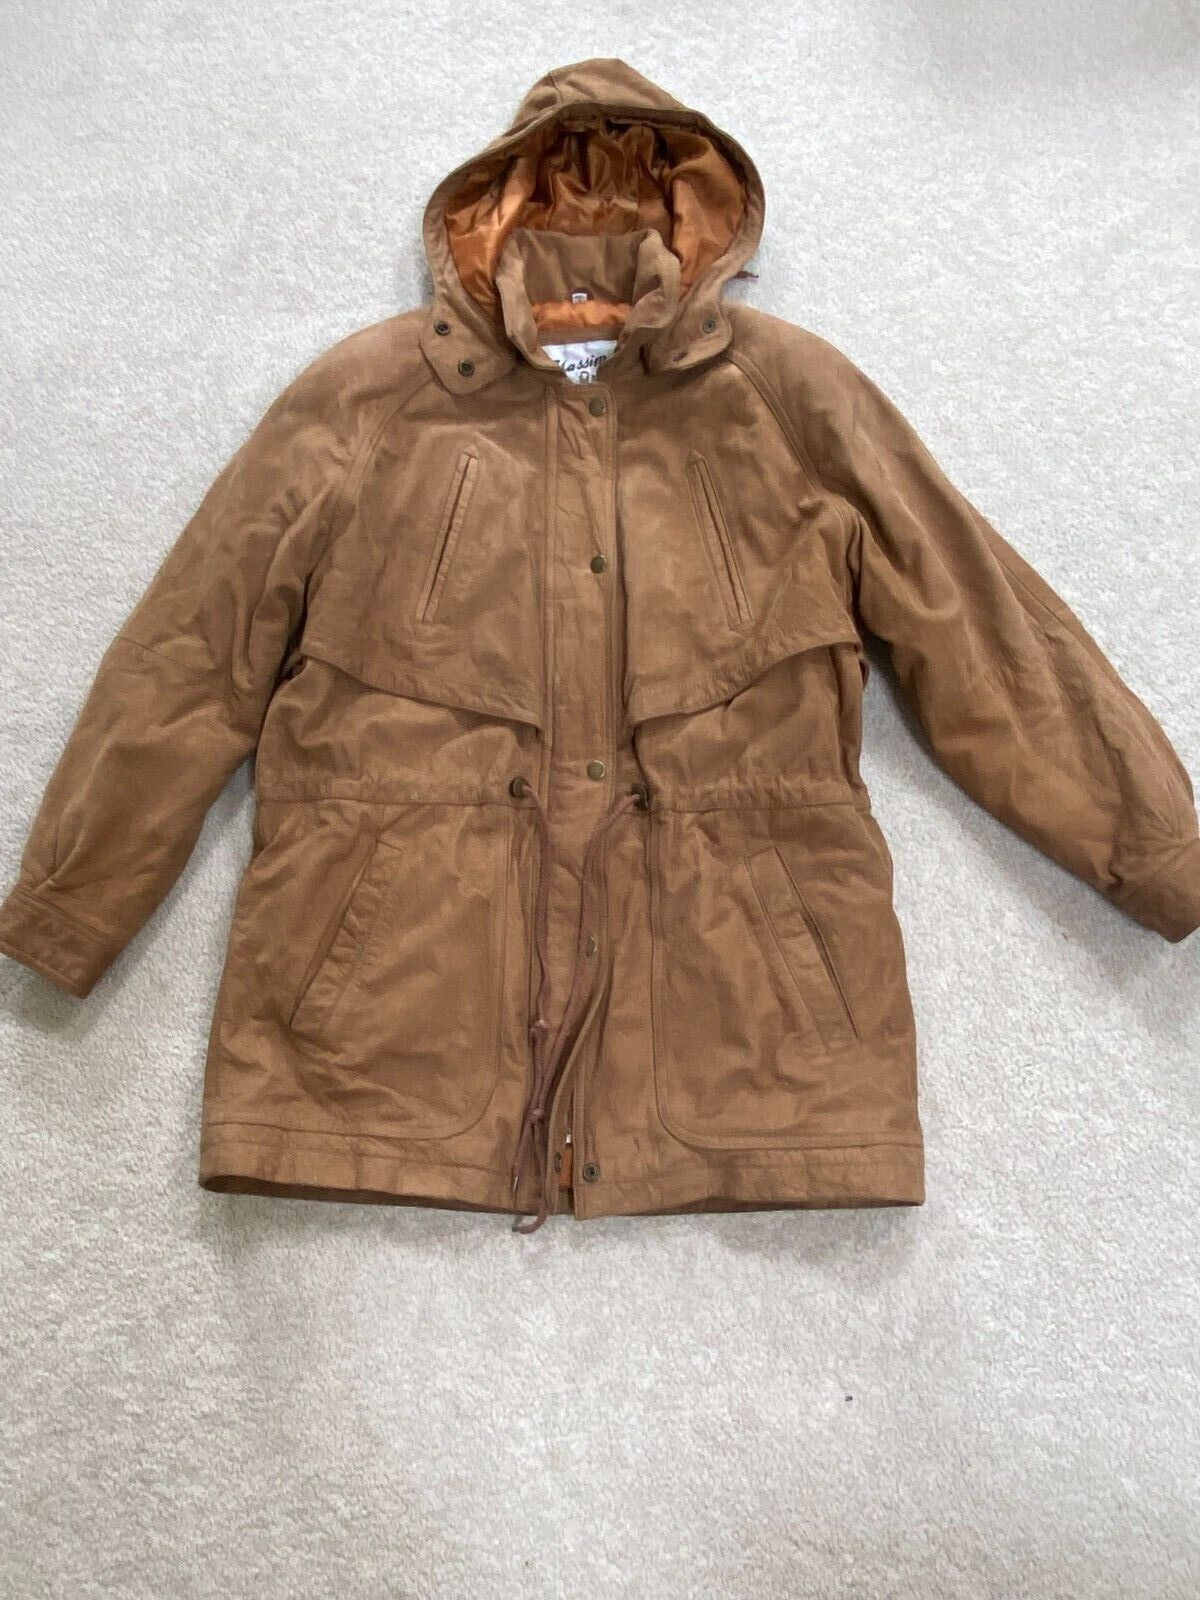 Vintage Women Mossimo Tan Leather Jacket Small Ma… - image 1